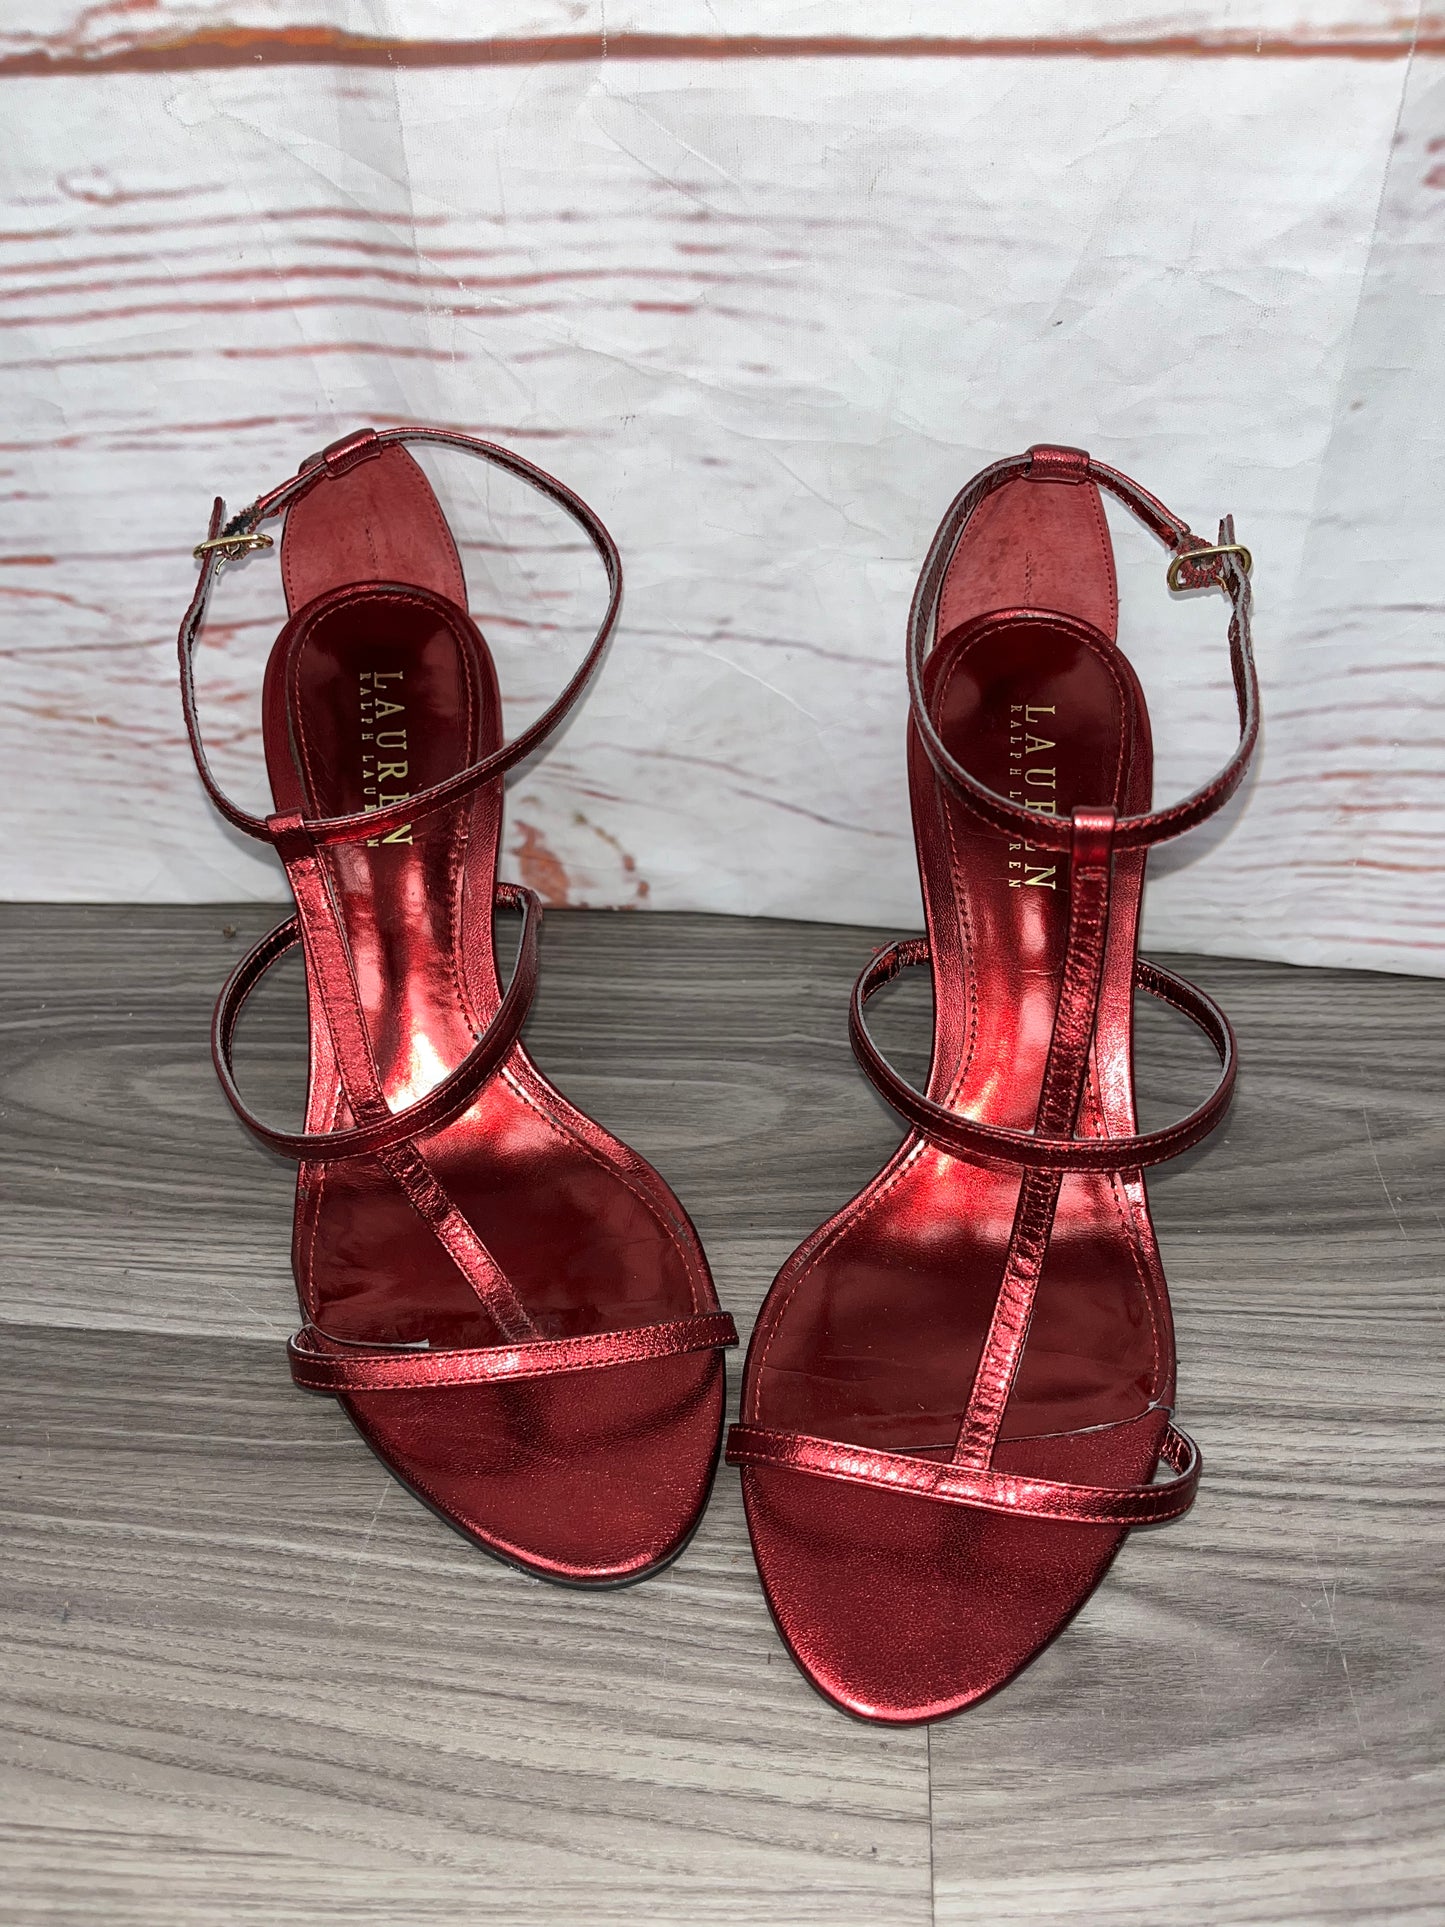 Shoes Heels Stiletto By Ralph Lauren  Size: 8.5